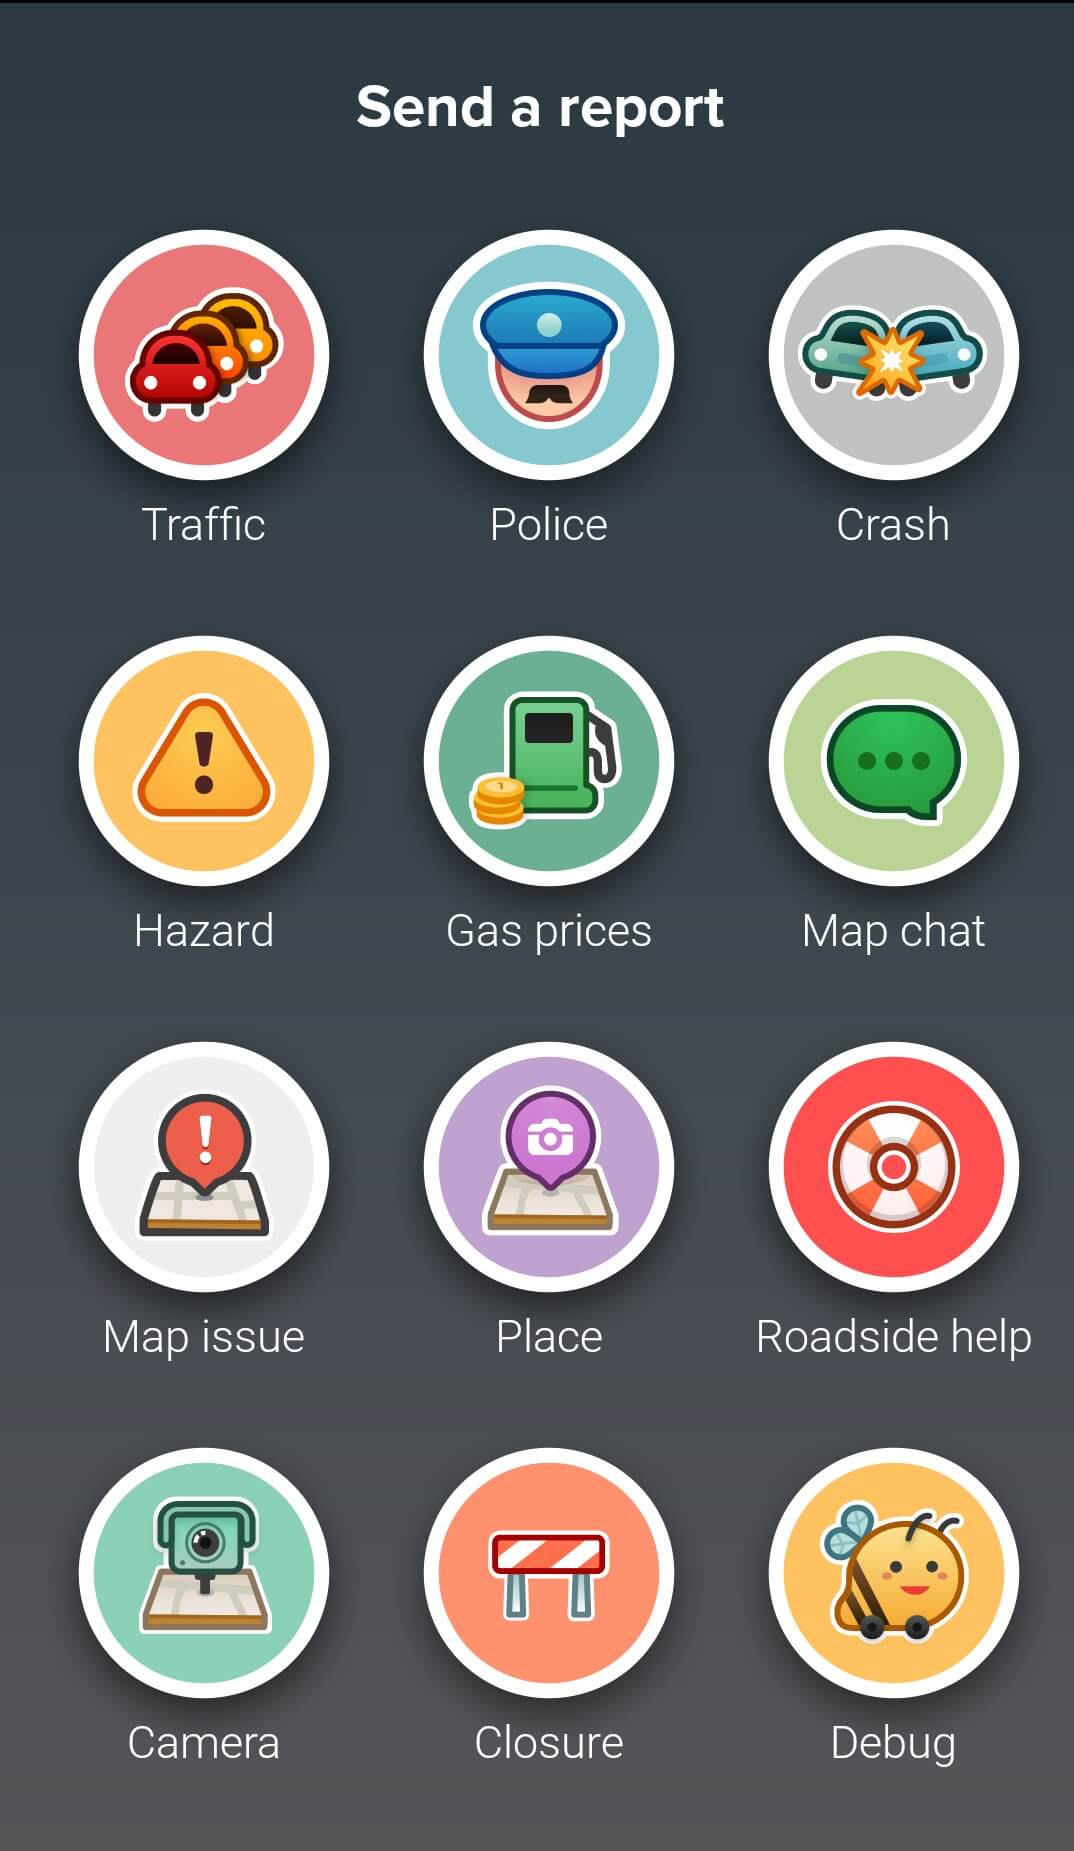 Map App Waze 